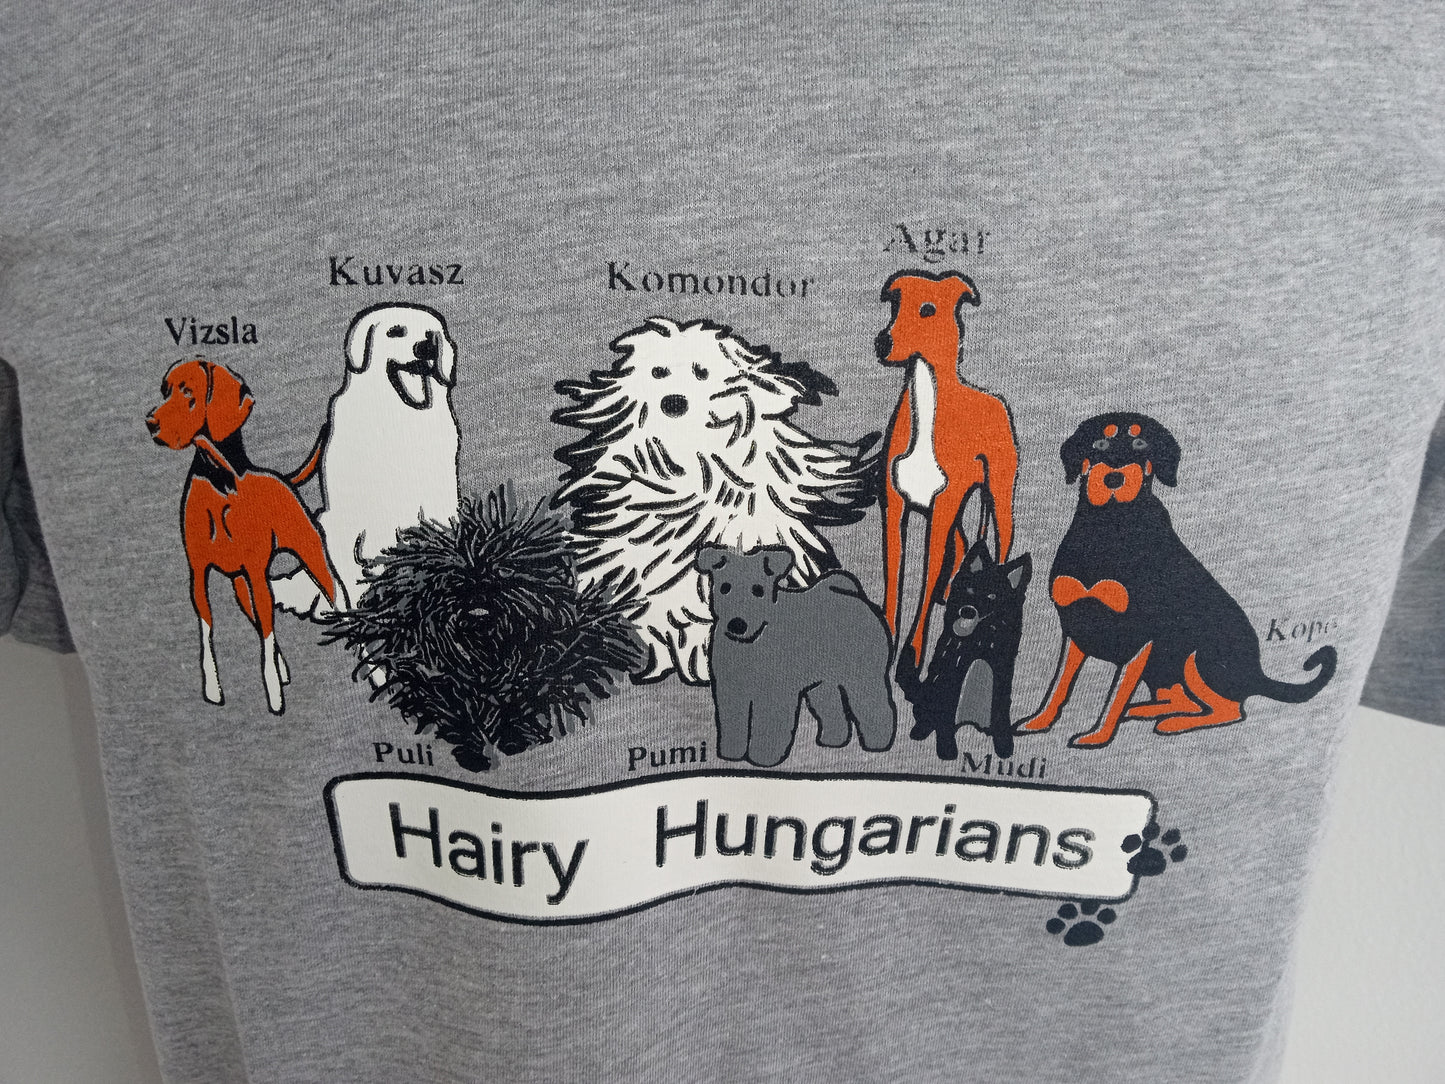 Hairy Hungarians